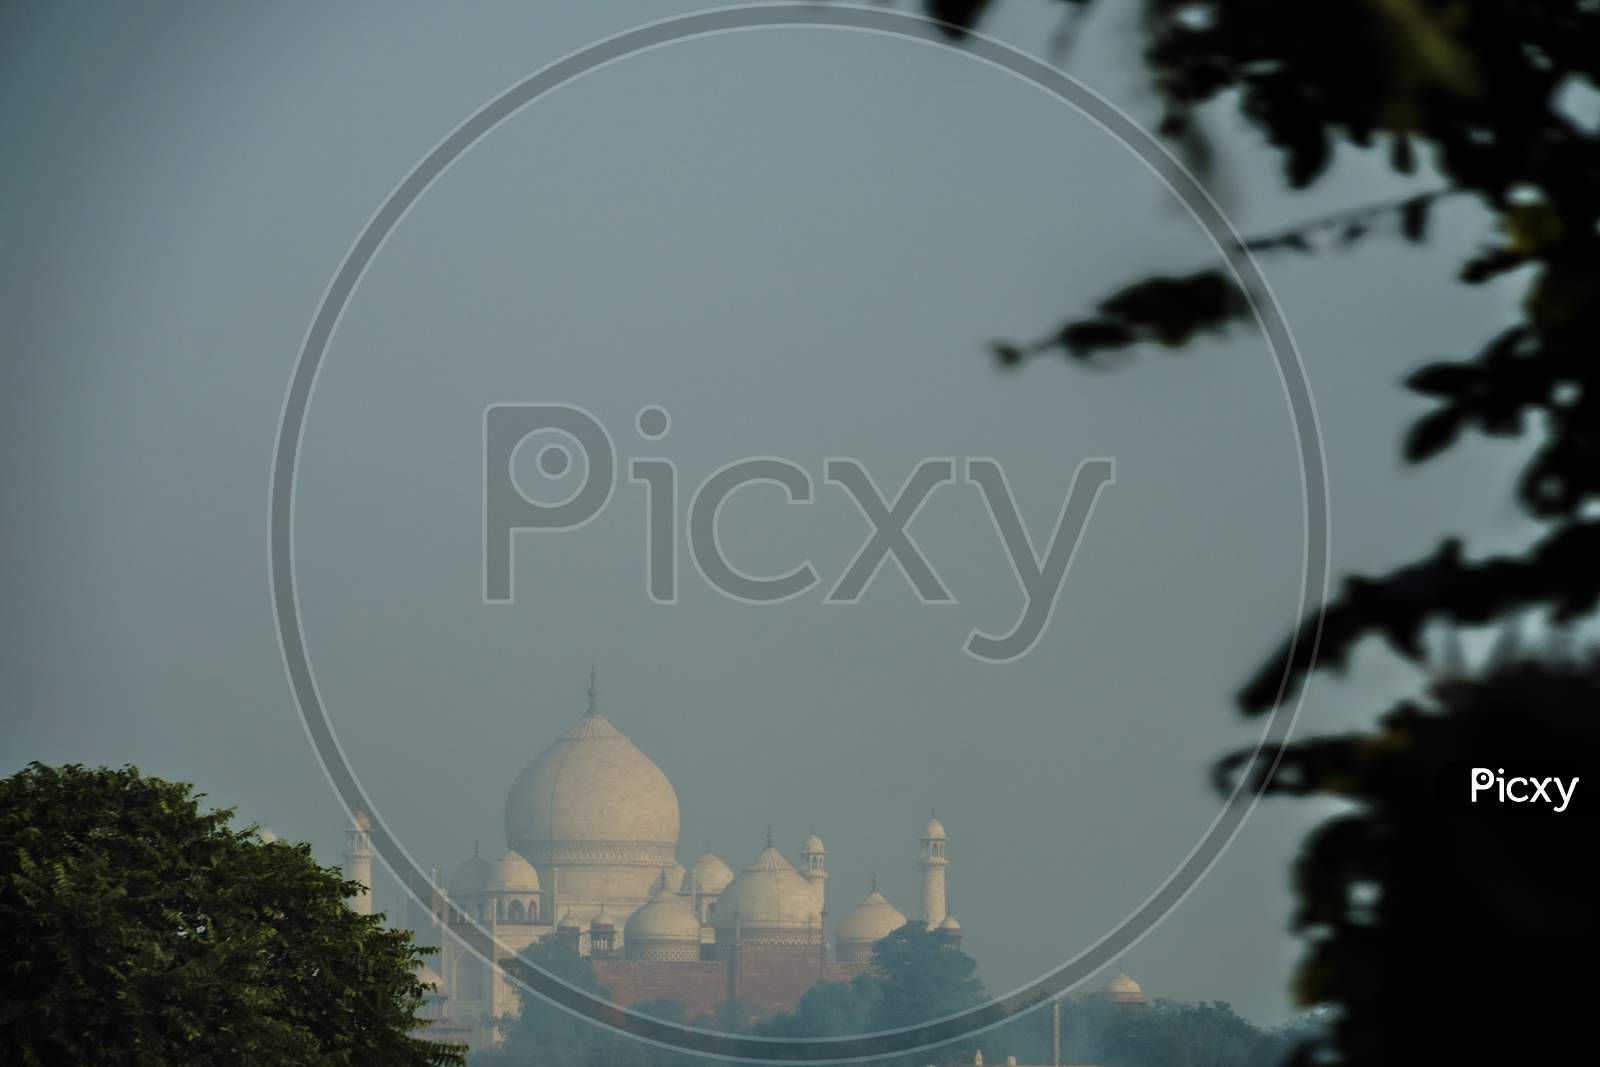 I See In The Distance The Taj Mahal (India, Agra)